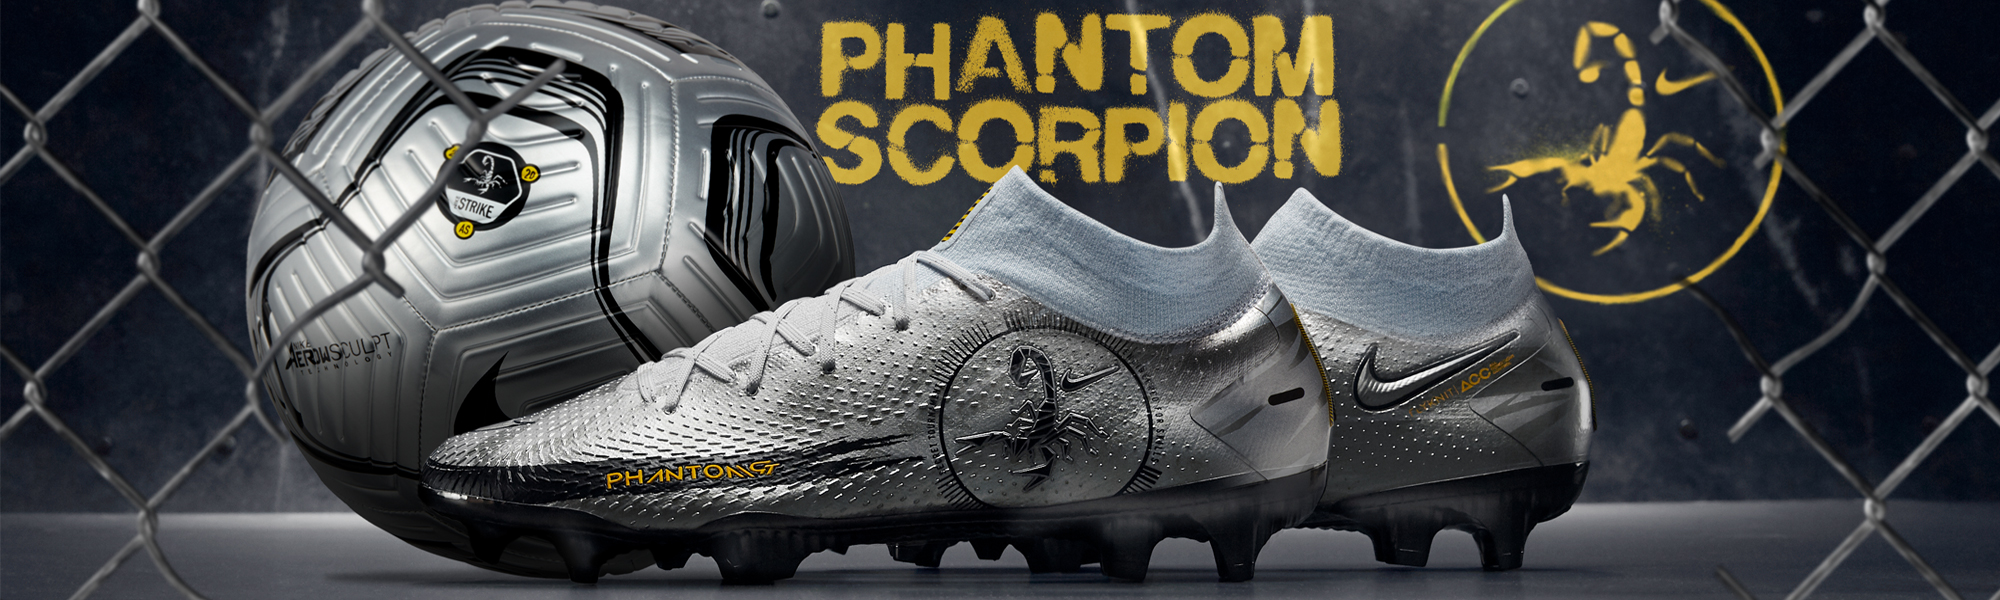 nike phantom soccer shoes